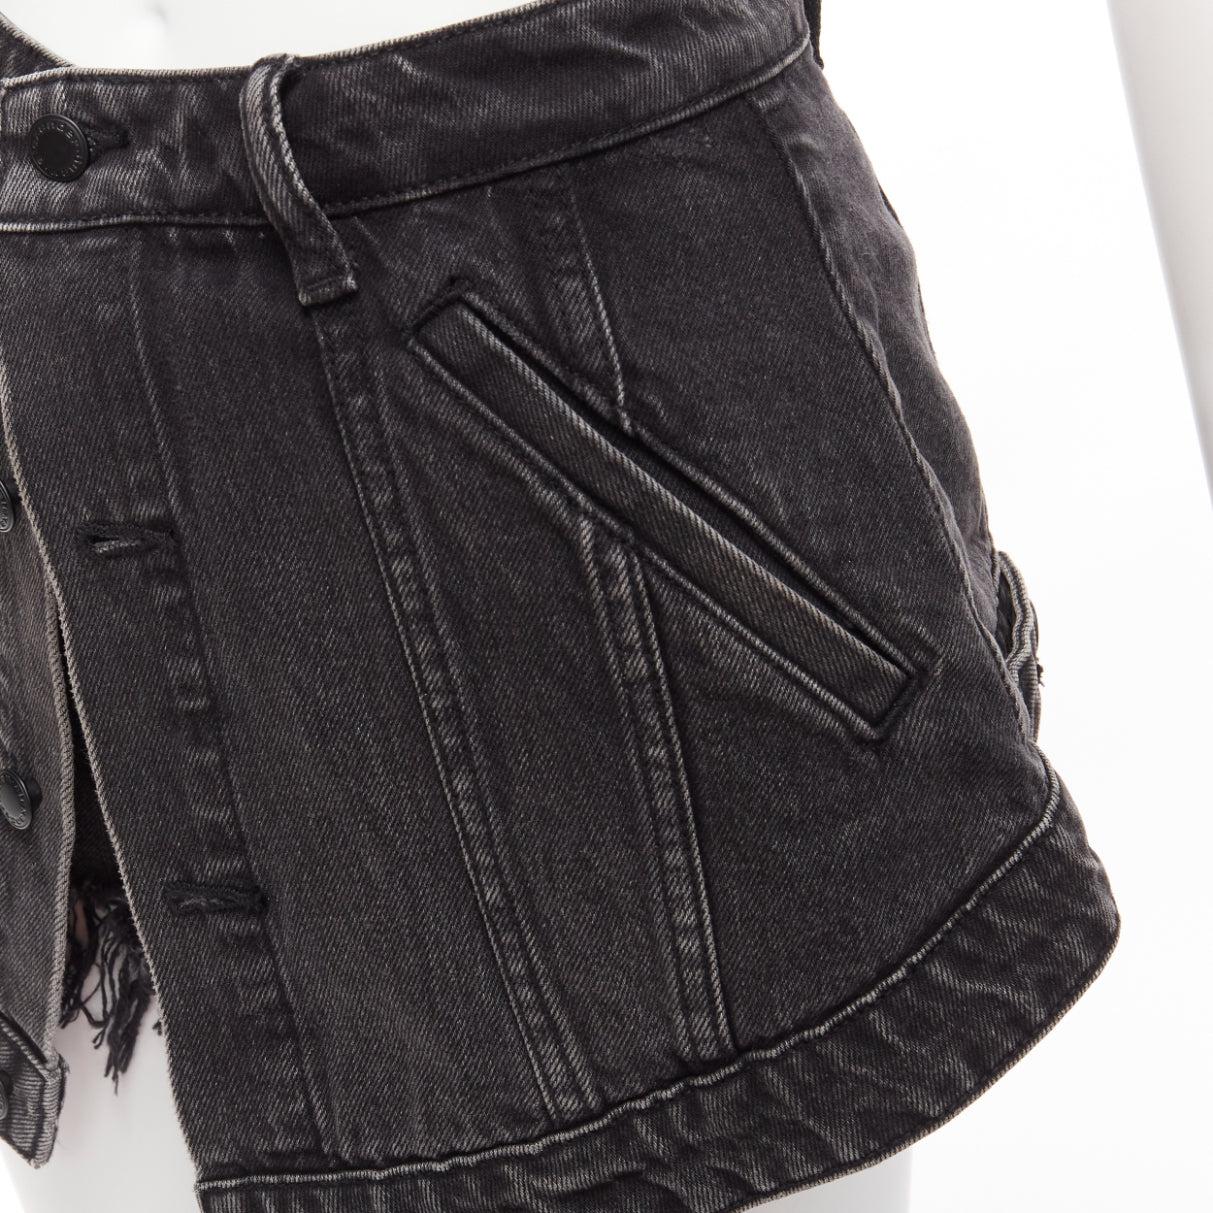 ALEXANDER WANG black washed cotton layered skort high waist cutaway shorts 25